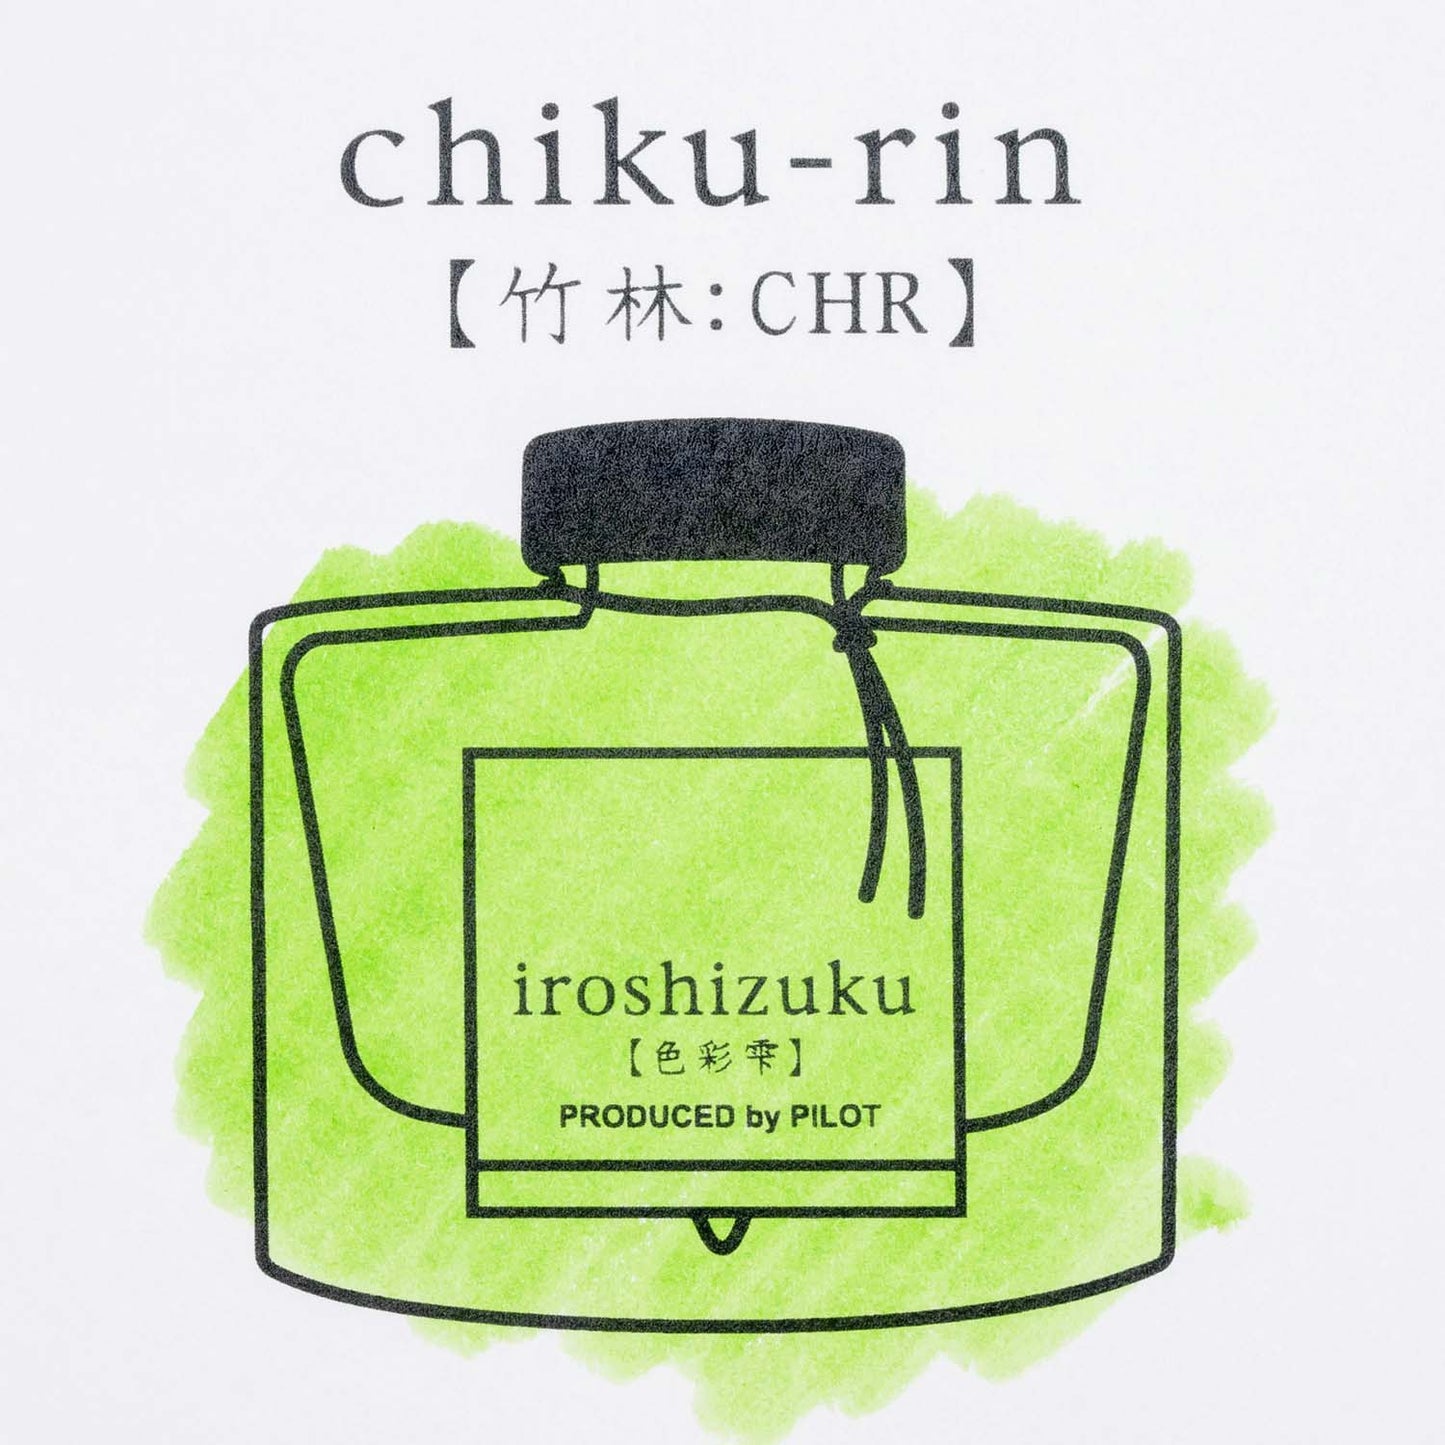 Pilot Iroshizuku Fountain Pen Ink - Chiku-rin (Bamboo Forest) green sample